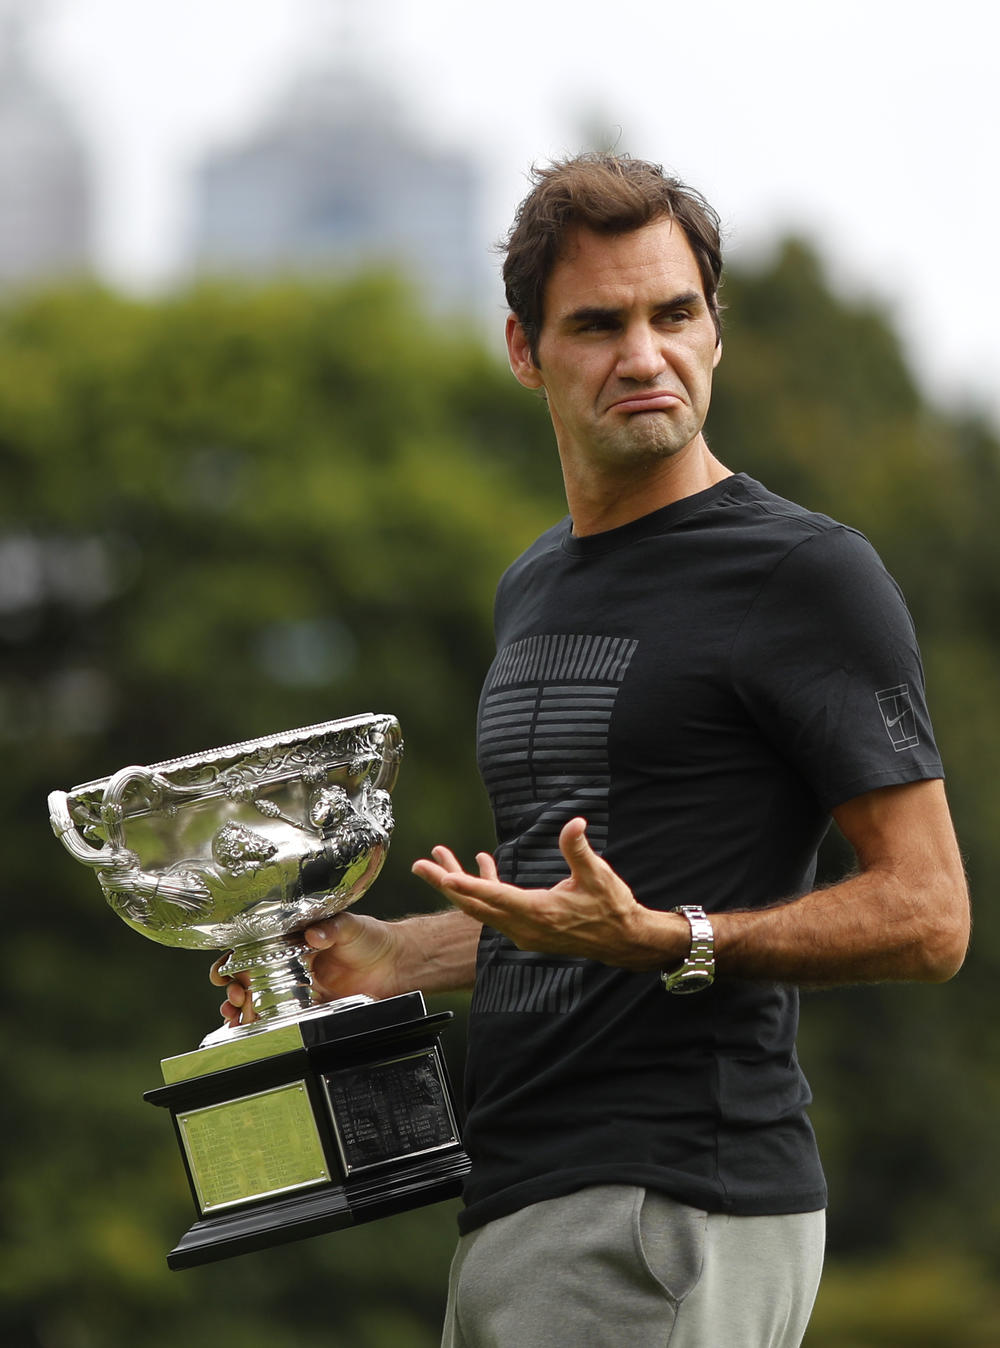 Rodžer Federer je i prvi favorit i prvi nosilac na Vimbldonu  